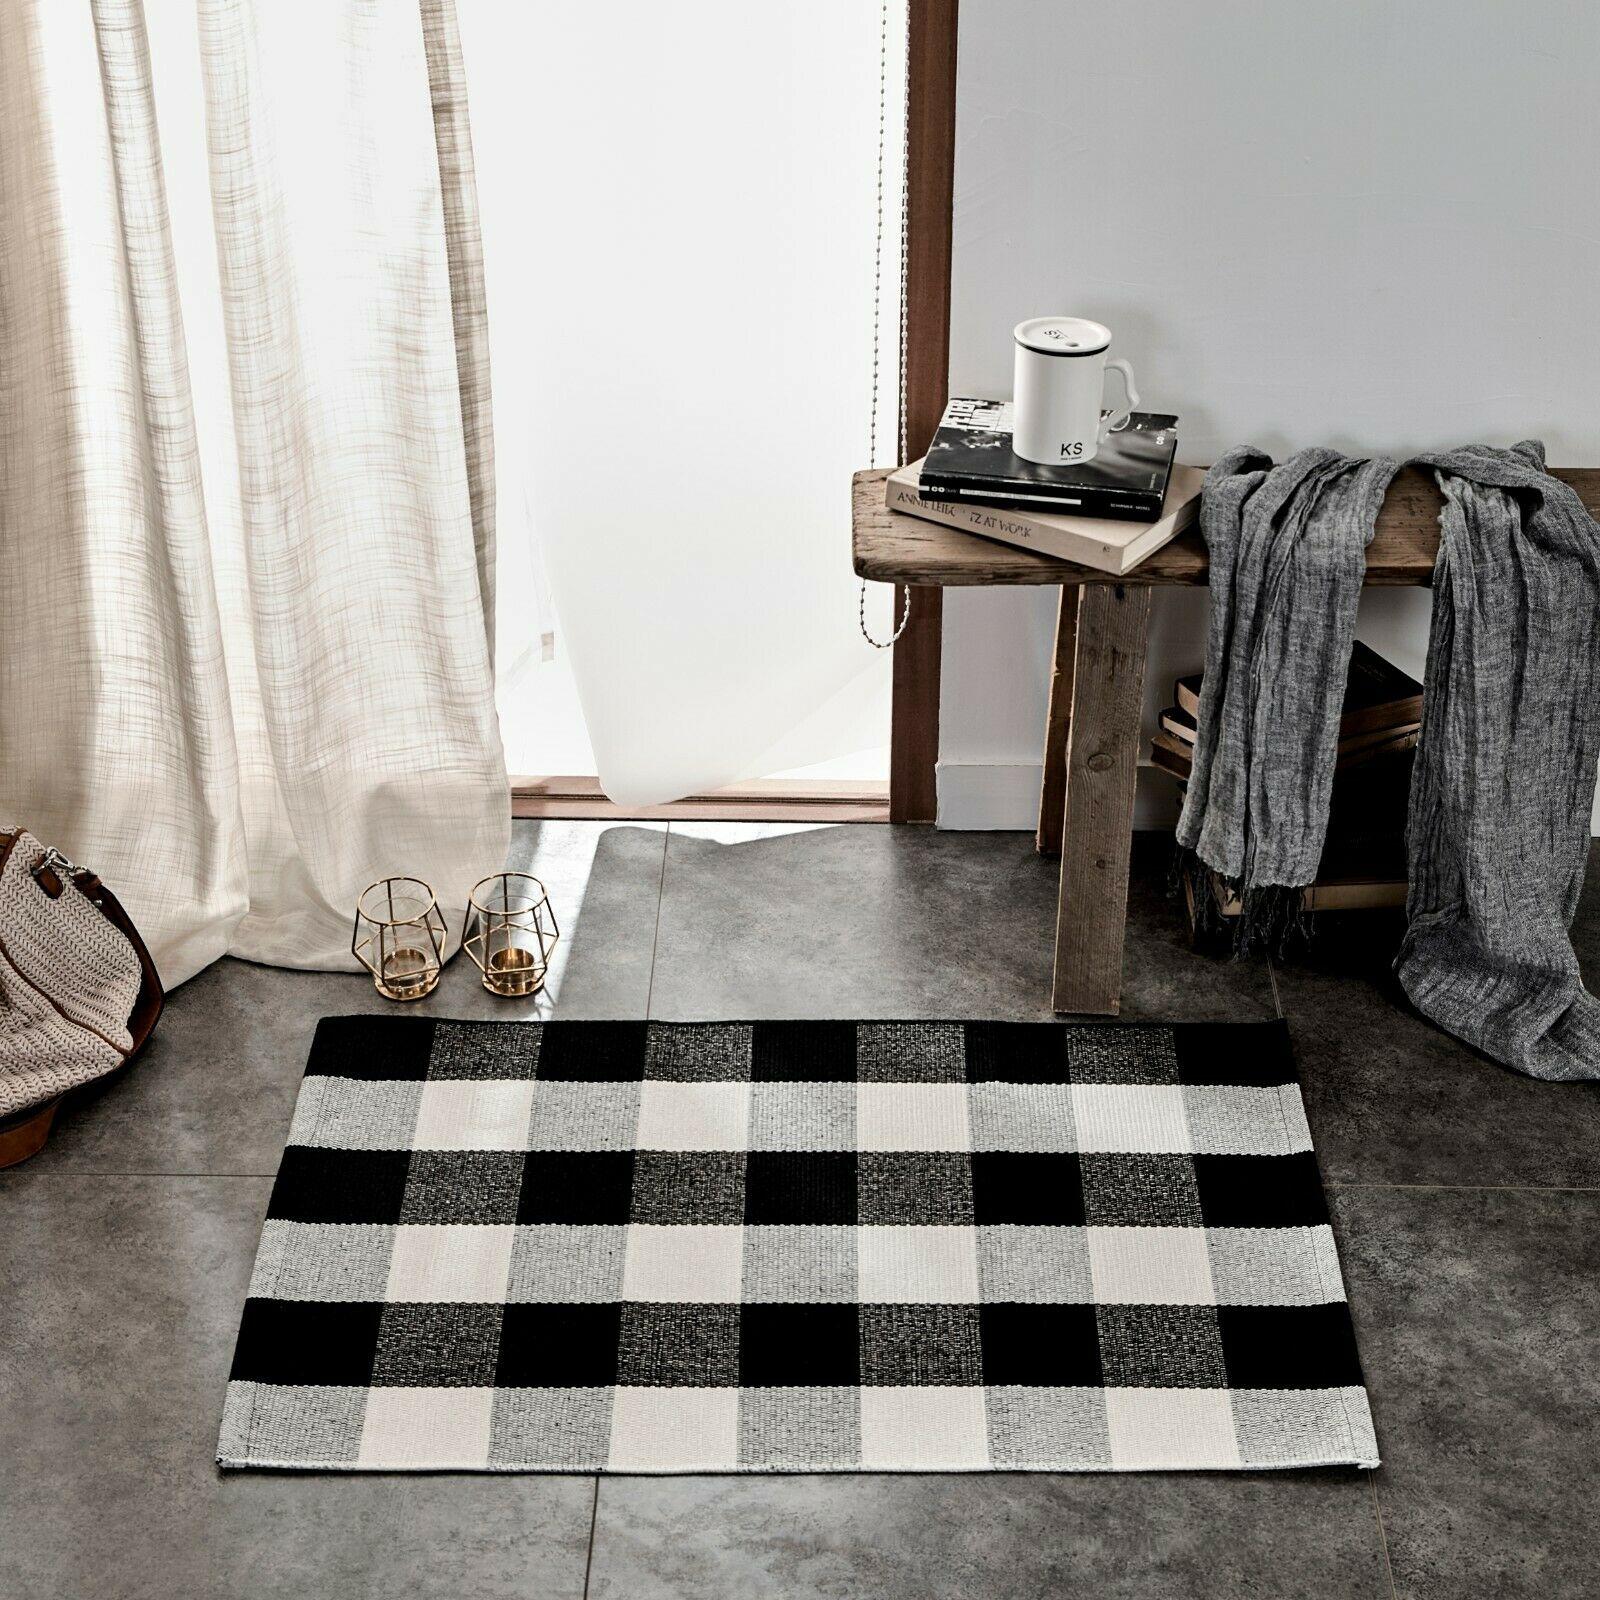 Buffalo Plaid Rug Layered Doormat Checkerboard Rug Black and White